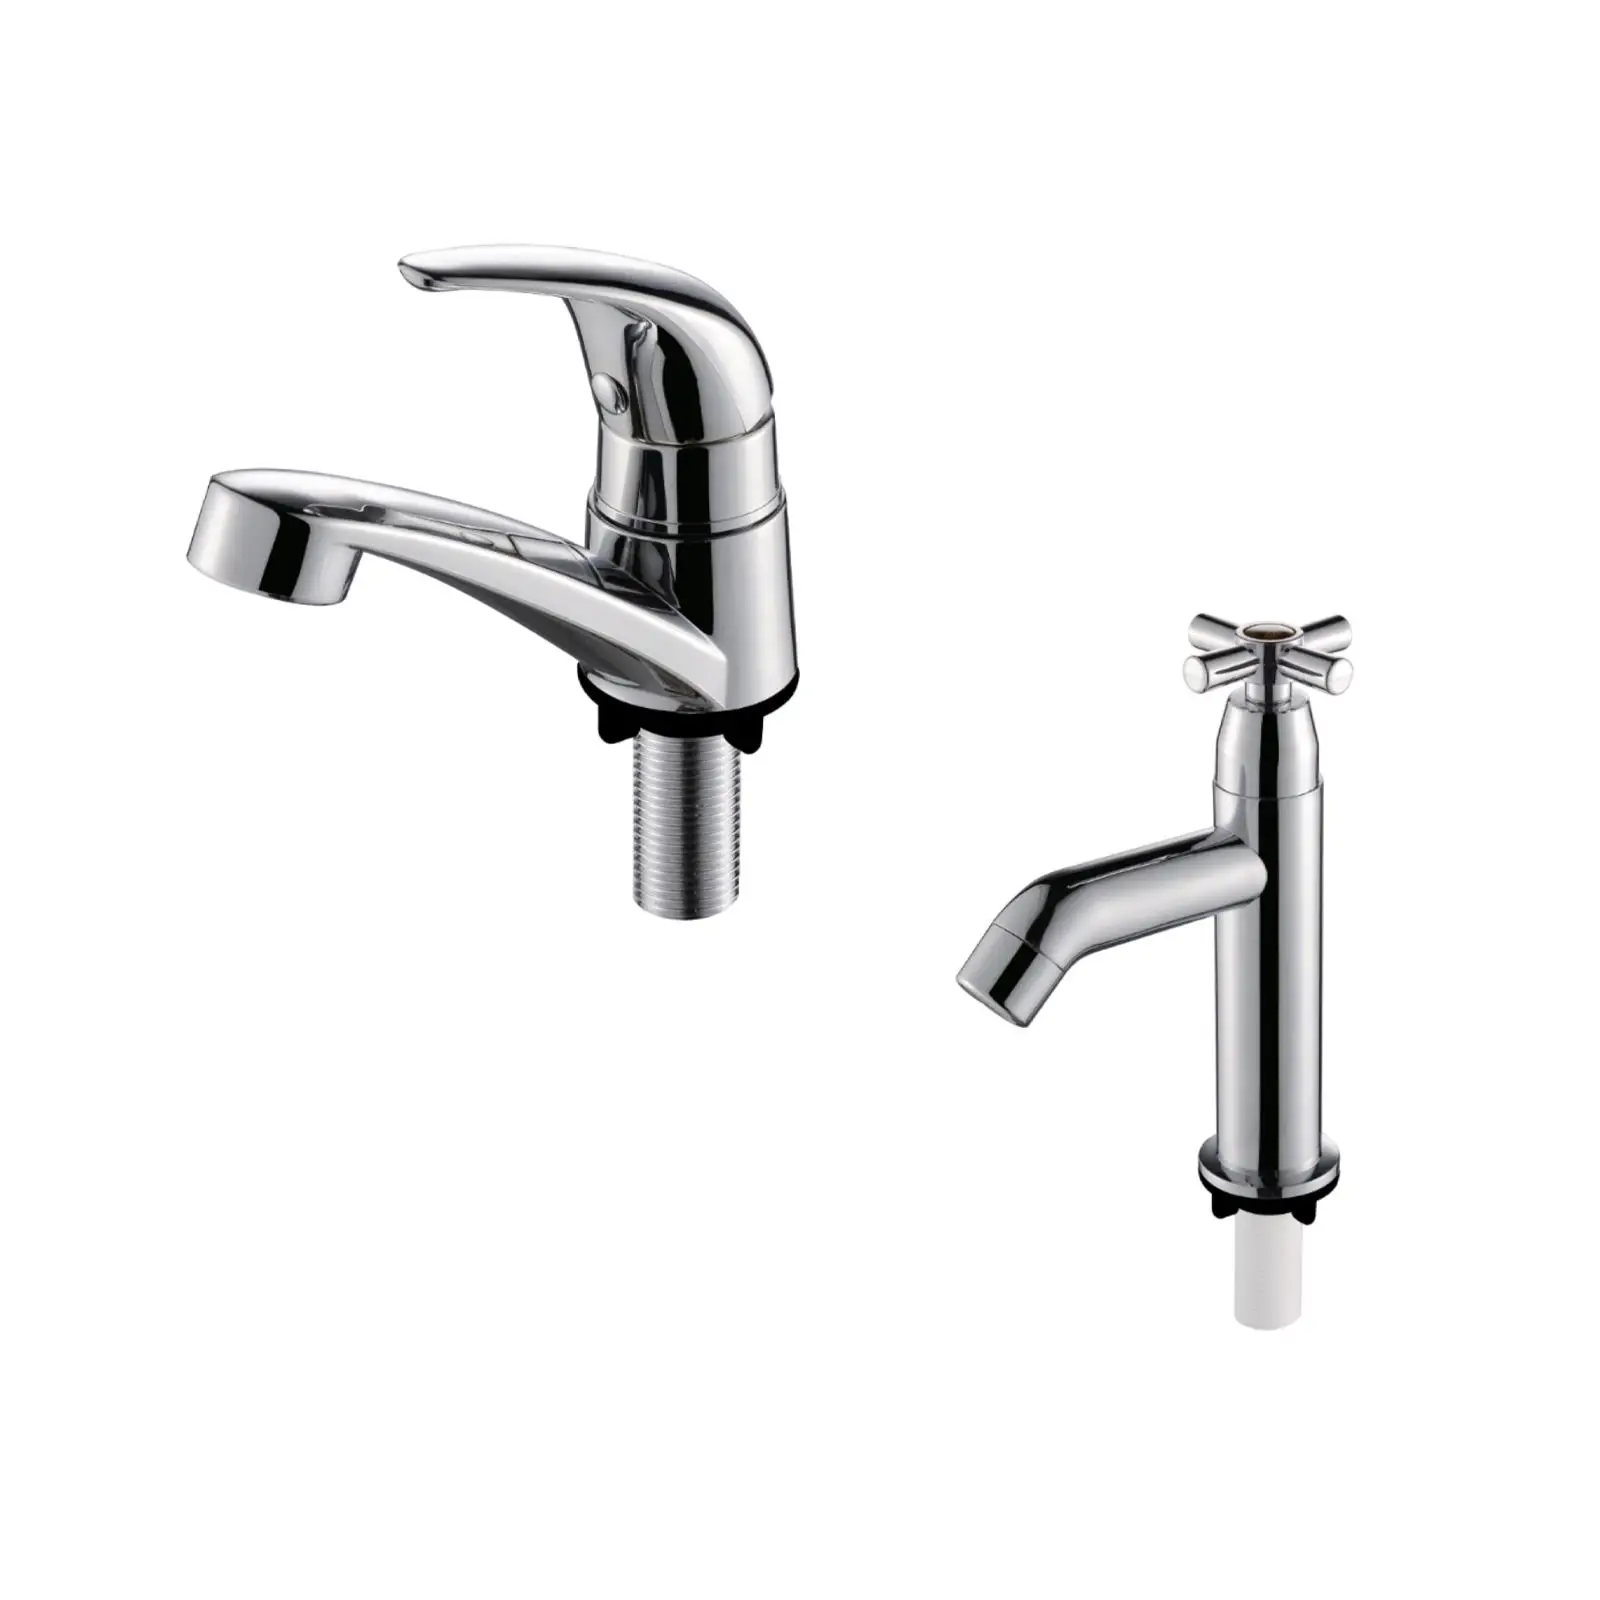 Water Faucet, Washing Machine Faucet, Wall Mounted Drop Resistant Washing